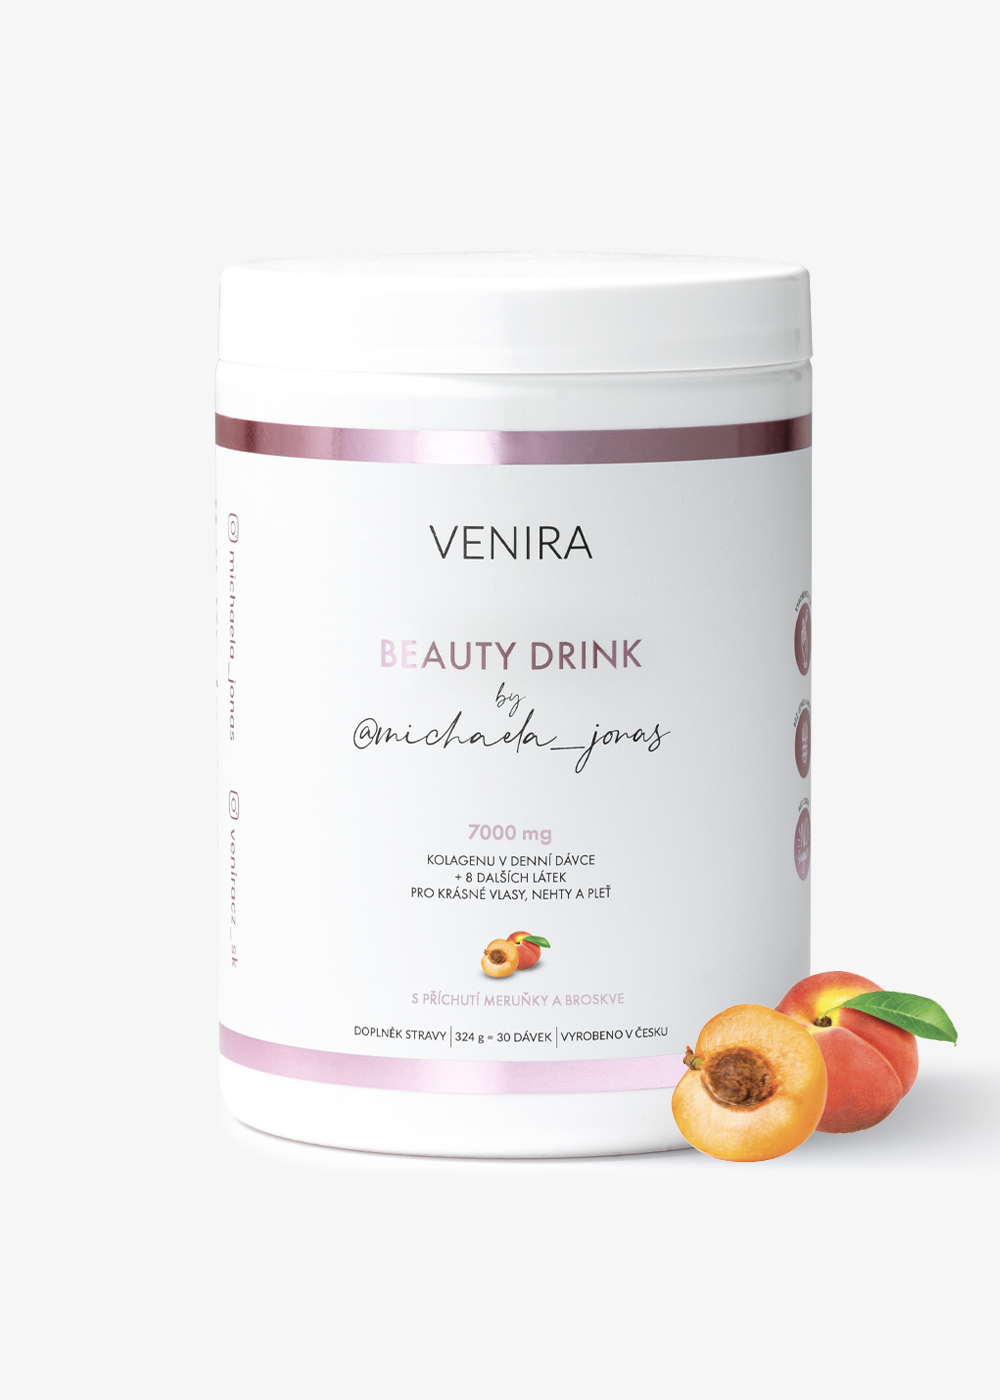 VENIRA beauty drink by @michaela_jonas, marhuľa a broskyňa, 324 g